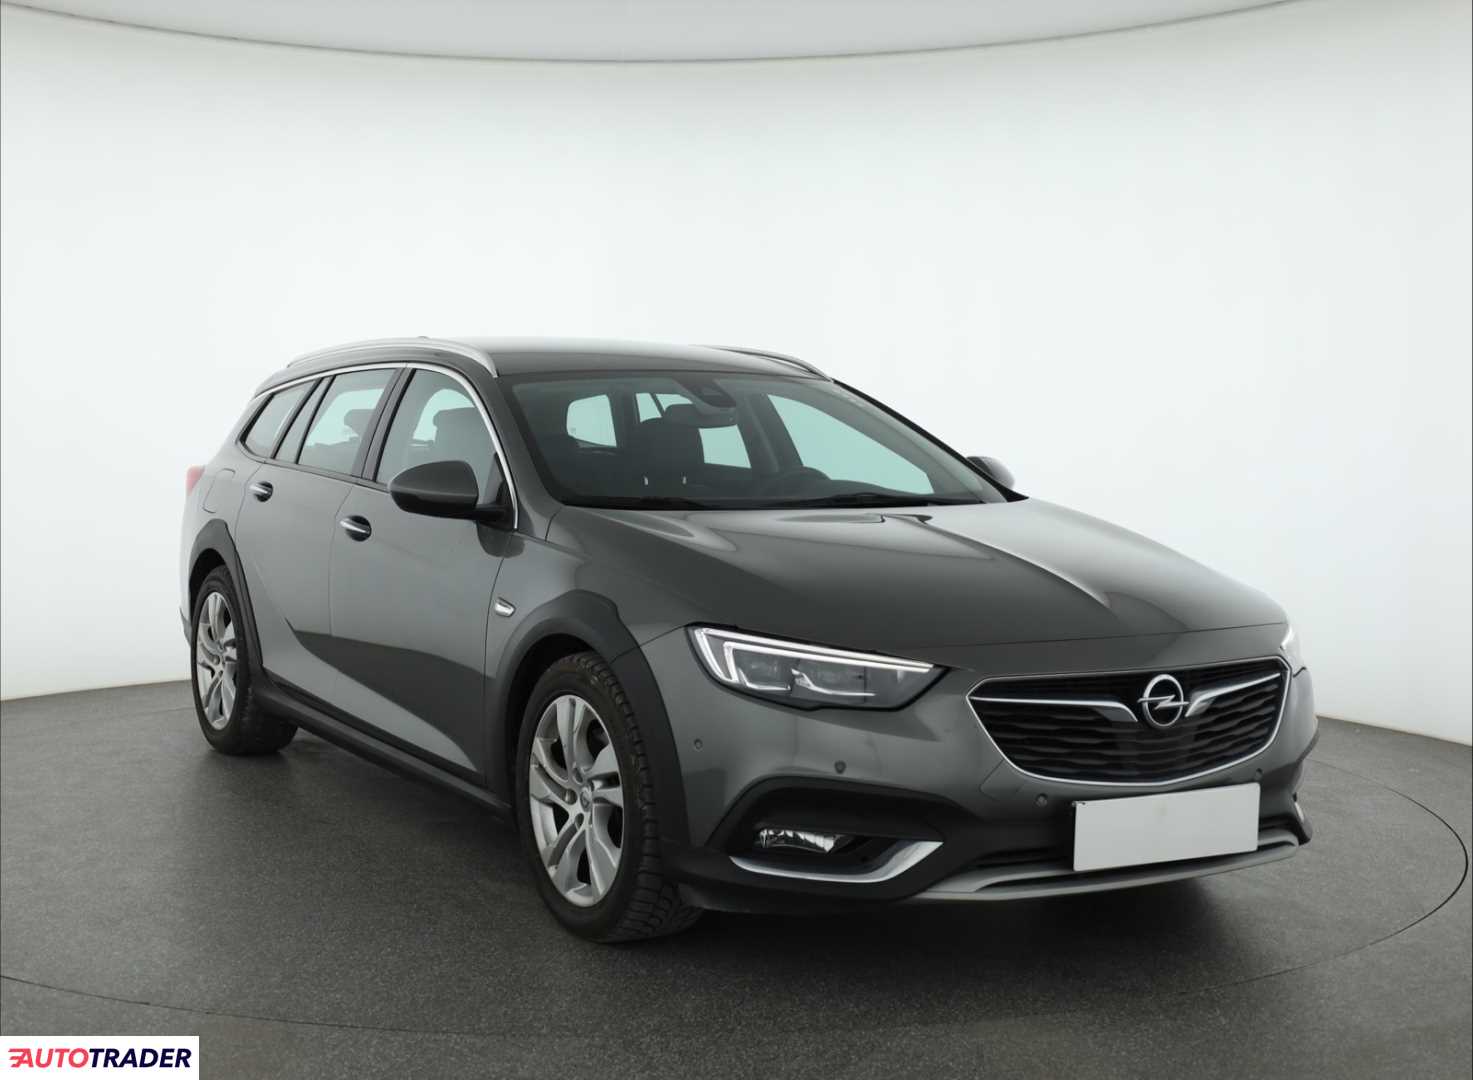 Opel Insignia 2018 2.0 206 KM